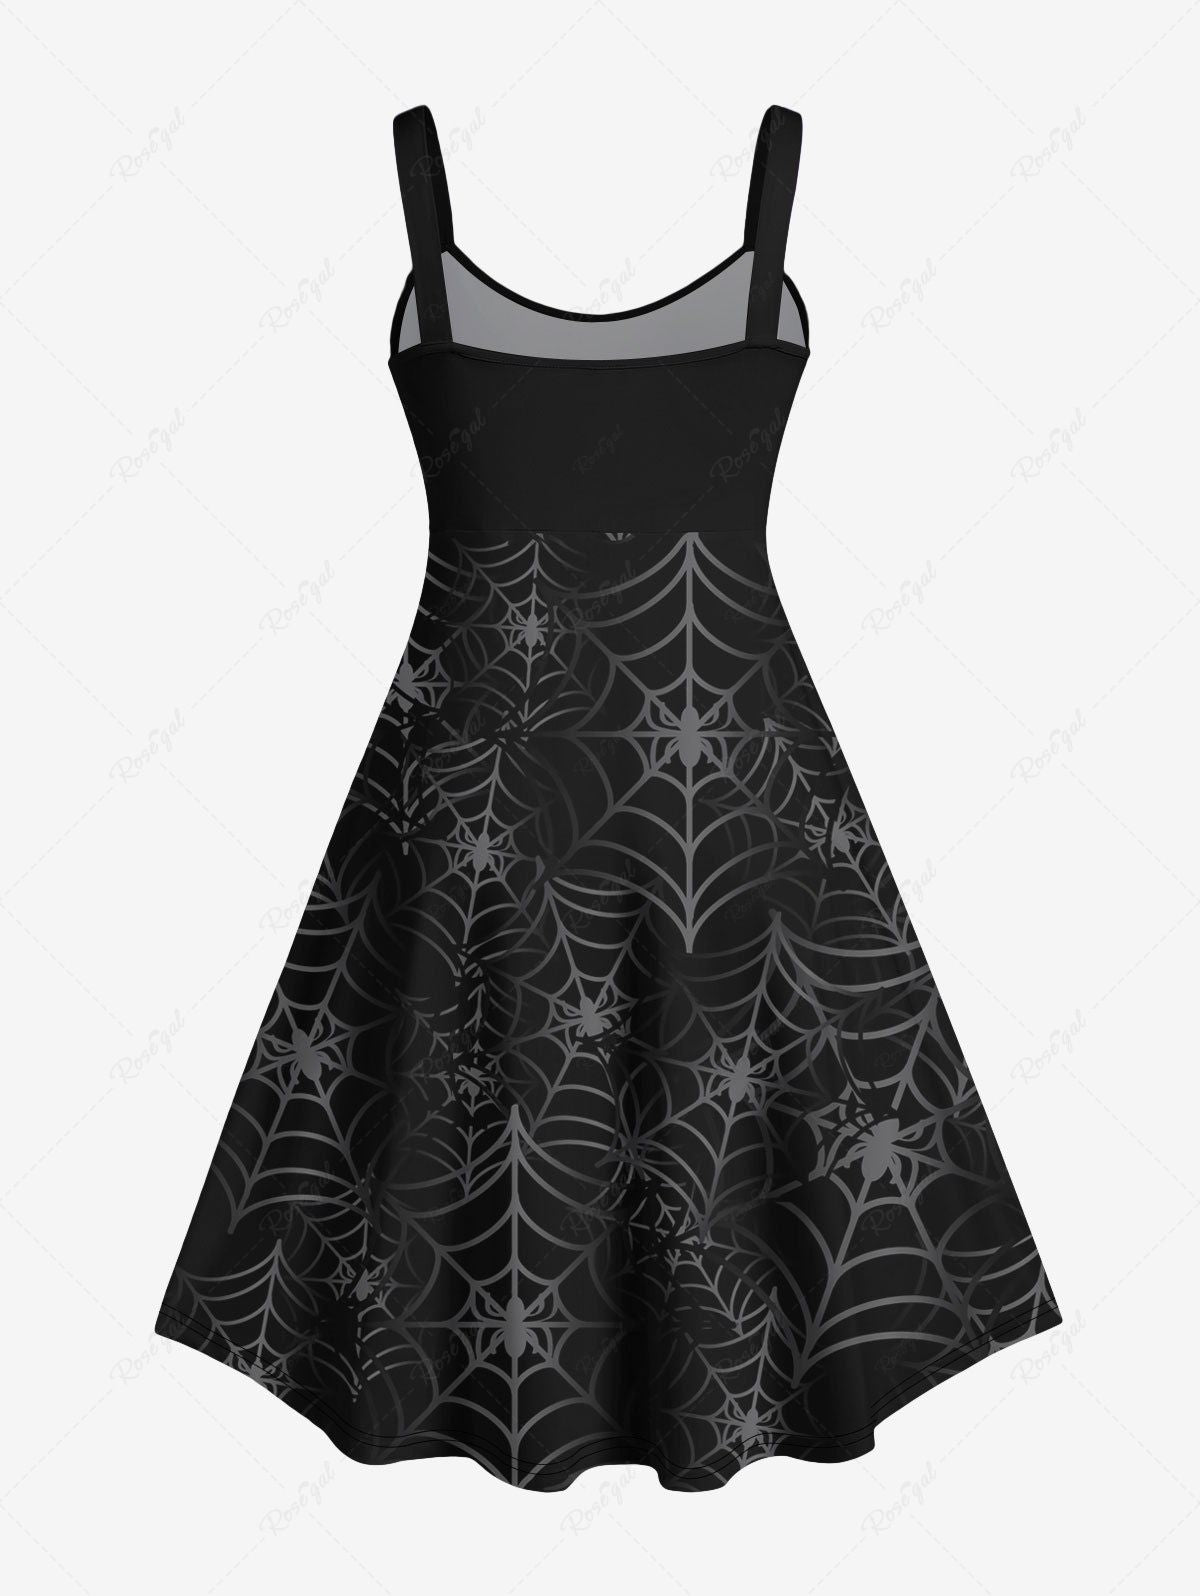 💗Avtvmnvvitch Loves💗 Gothic Halloween Costume Spider Web Grommets Buckle Chain 3d Print Tank Dress